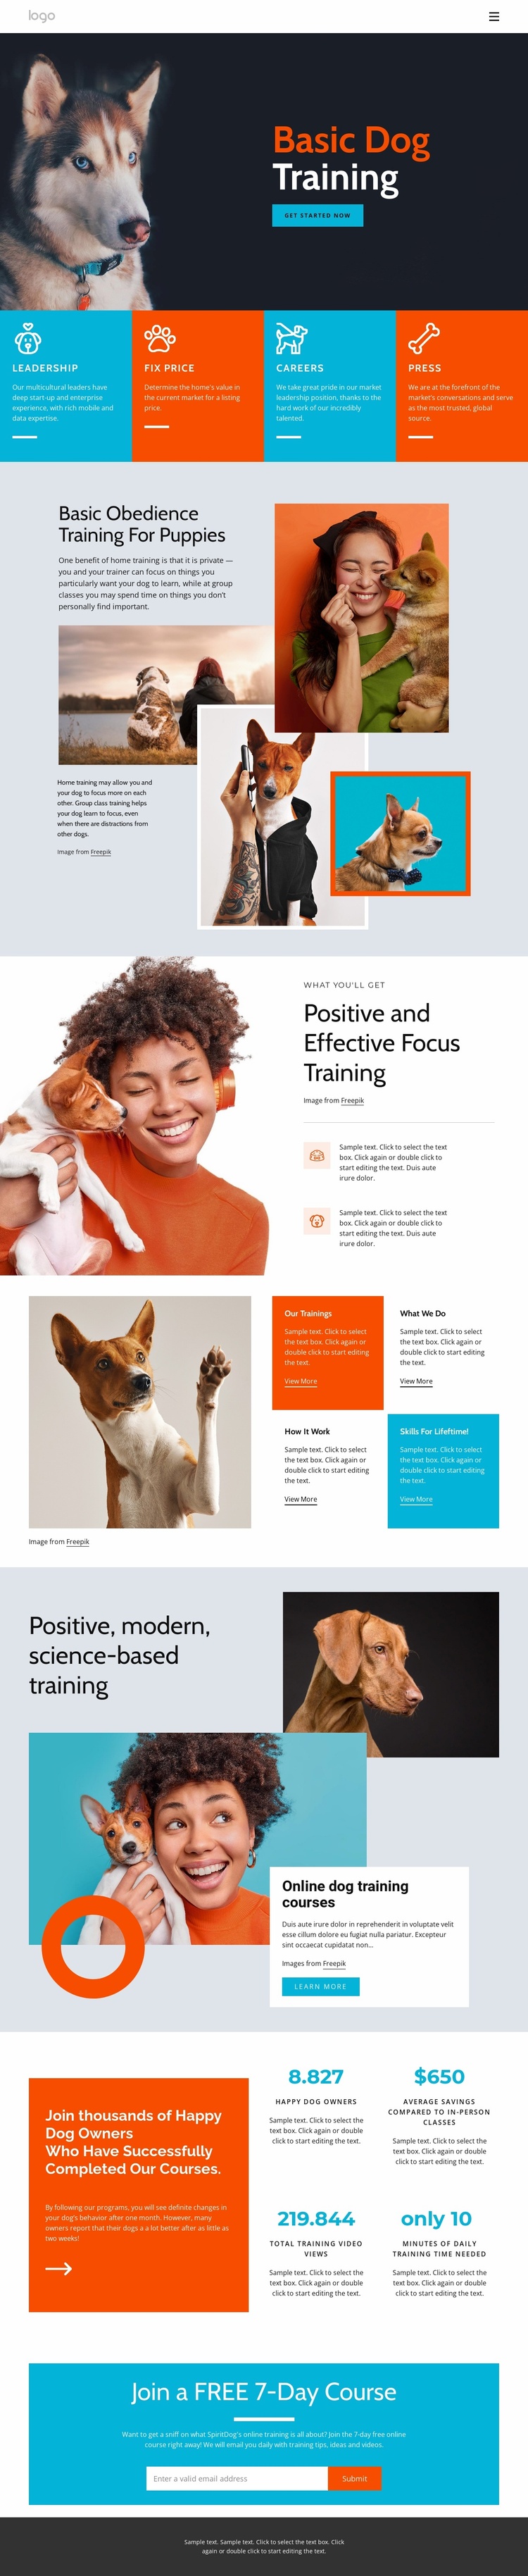 Dog training courses Website Template